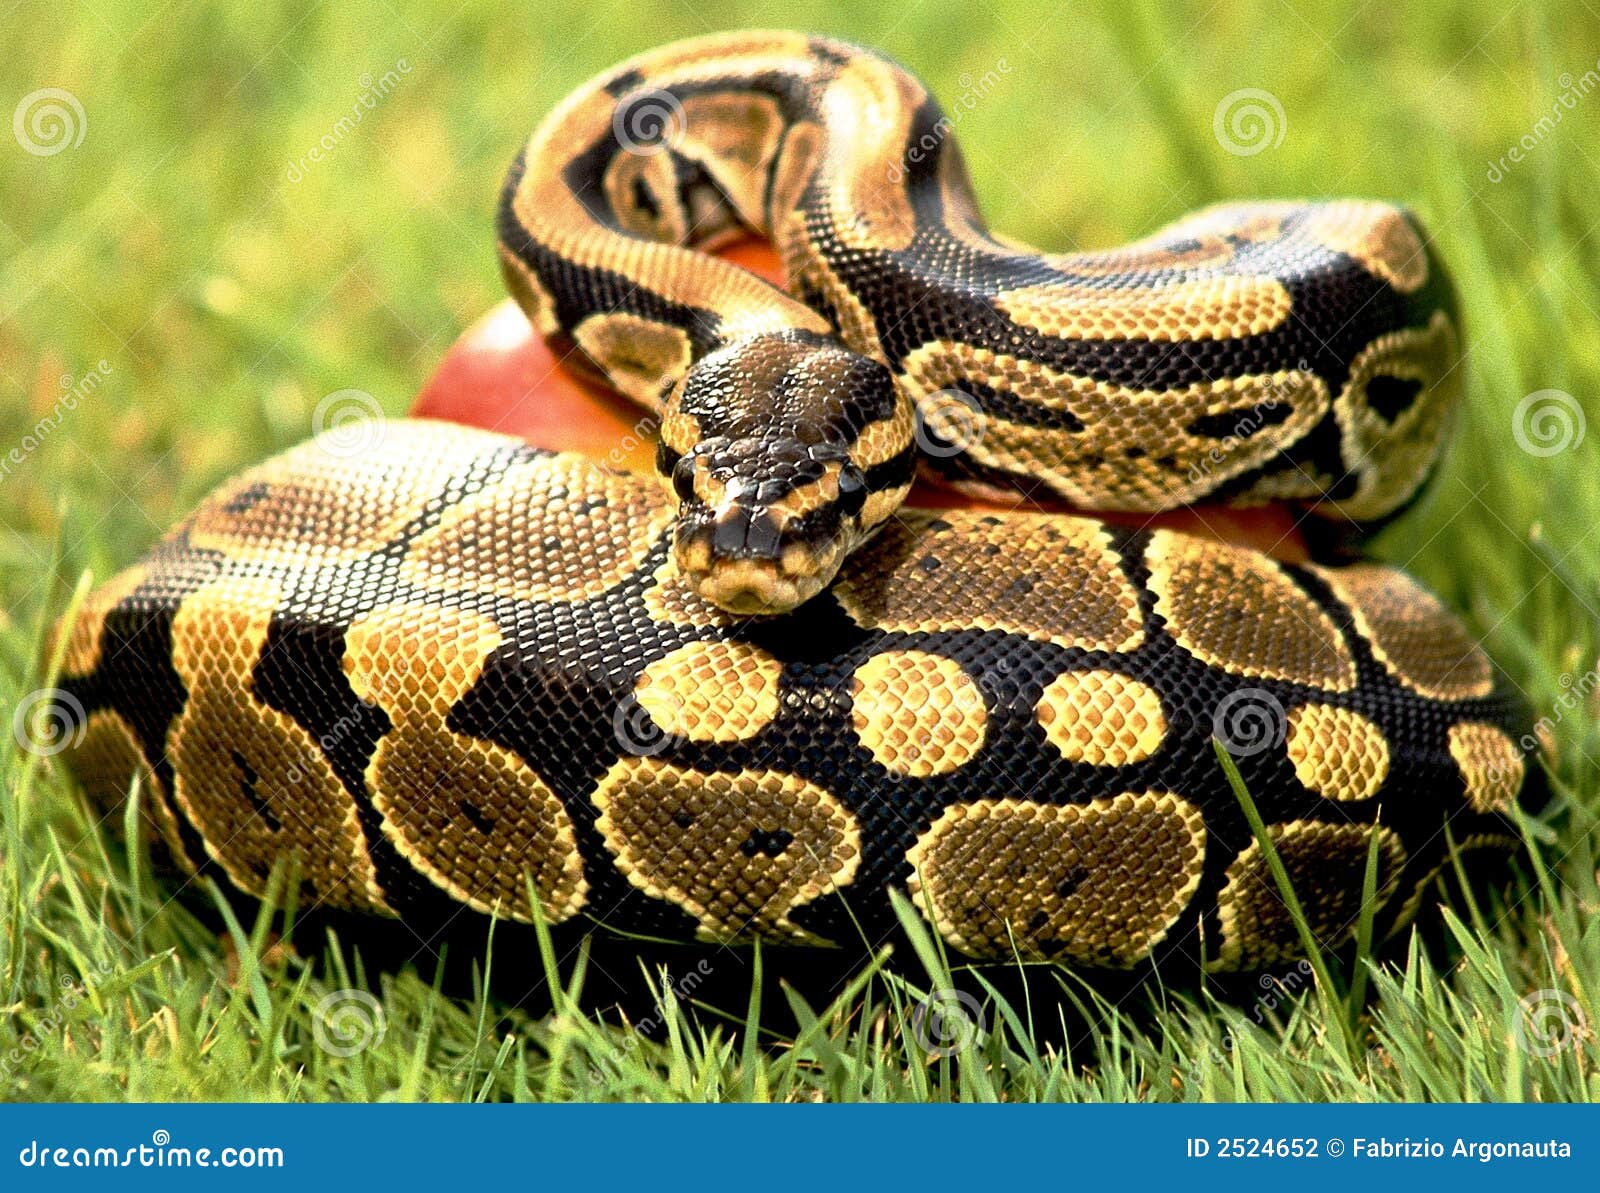 Serpent Python Stock Photography - Image: 2524652